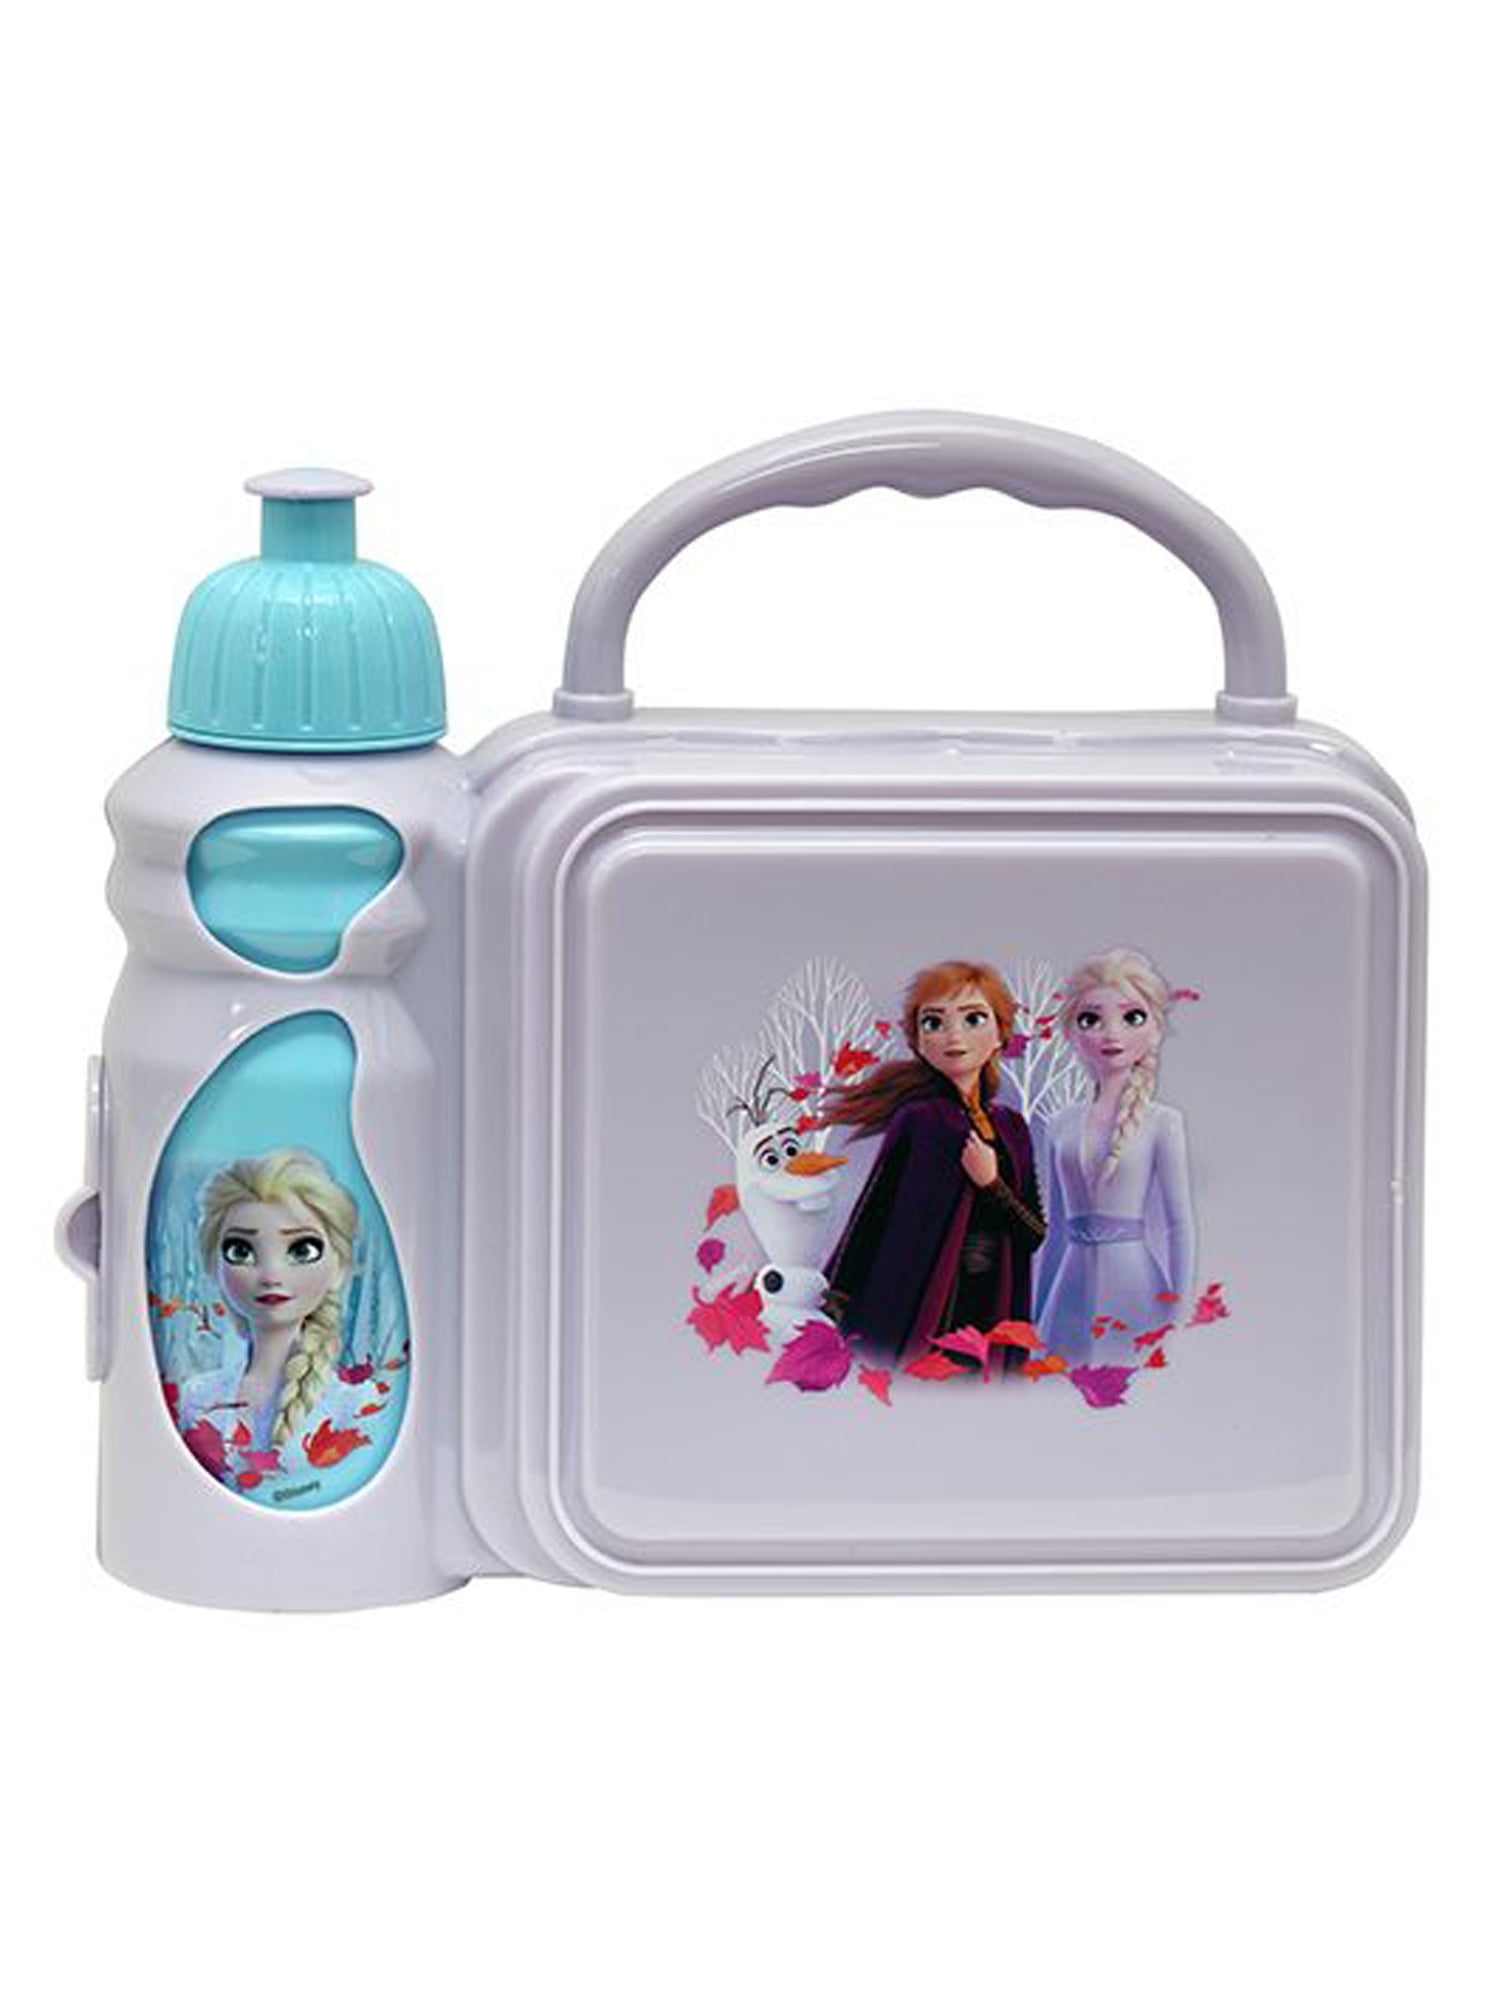 Disney Frozen Lunch Box Store - www.edoc.com.vn 1693906706